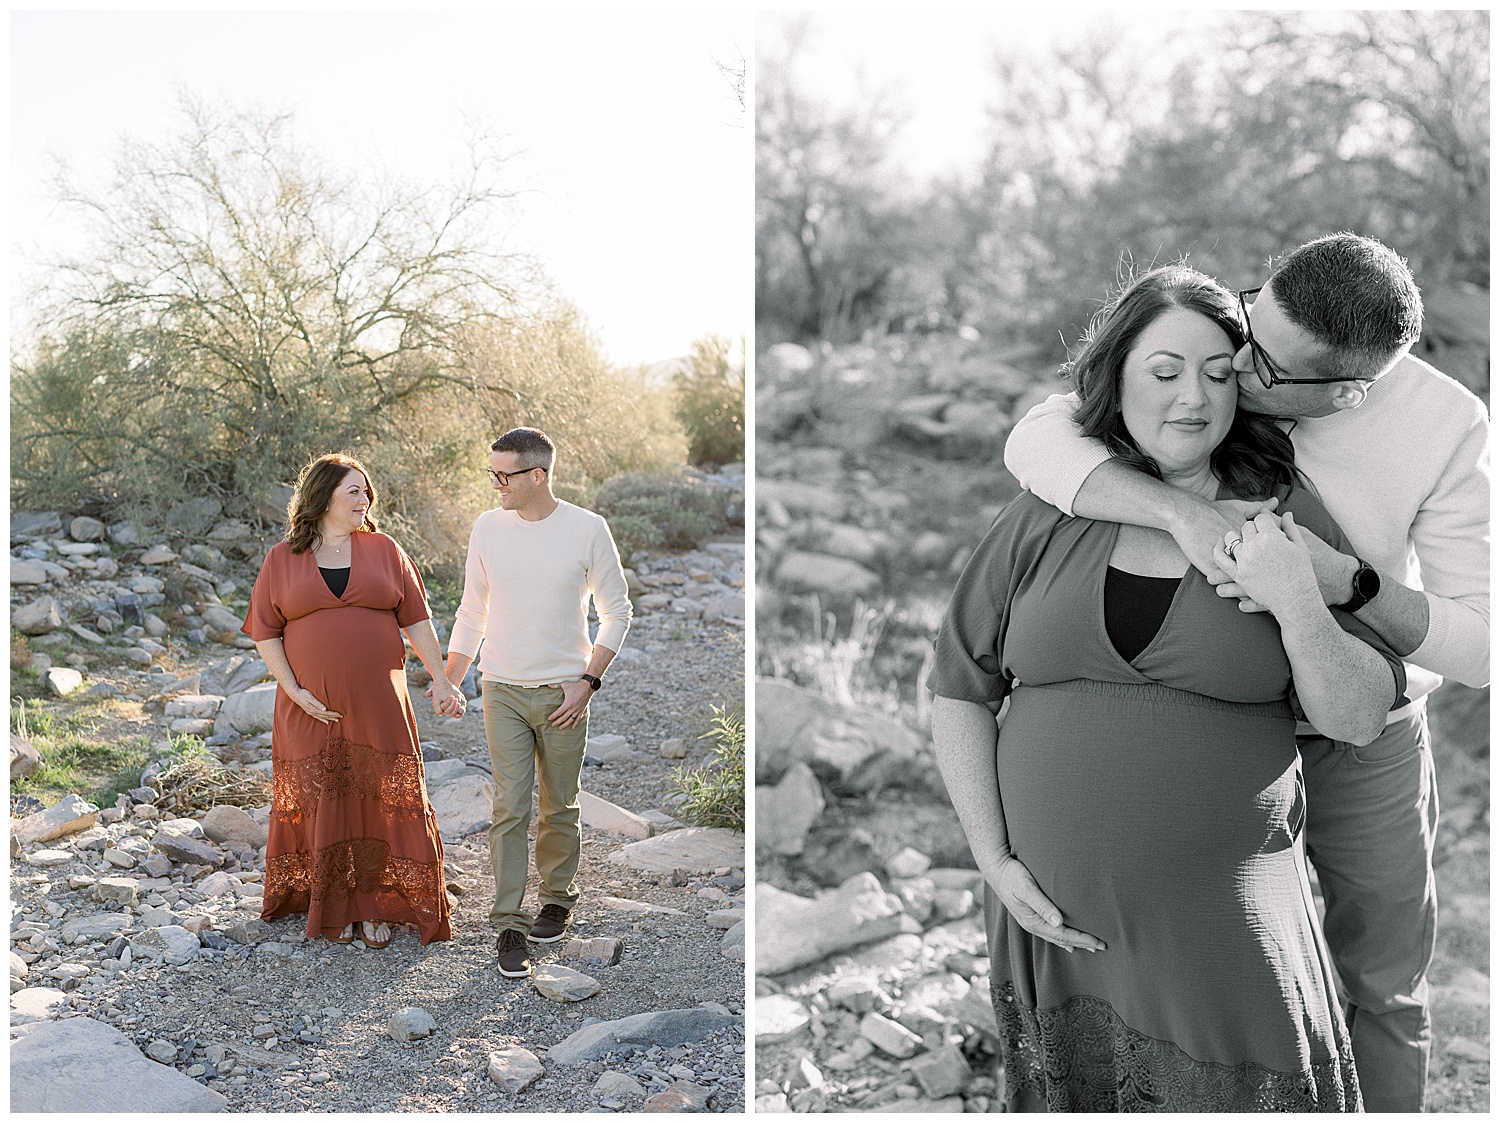 Desert Maternity Session in Scottsdale Arizona, Rust and Neutral Palette, Arizona Maternity Photographer